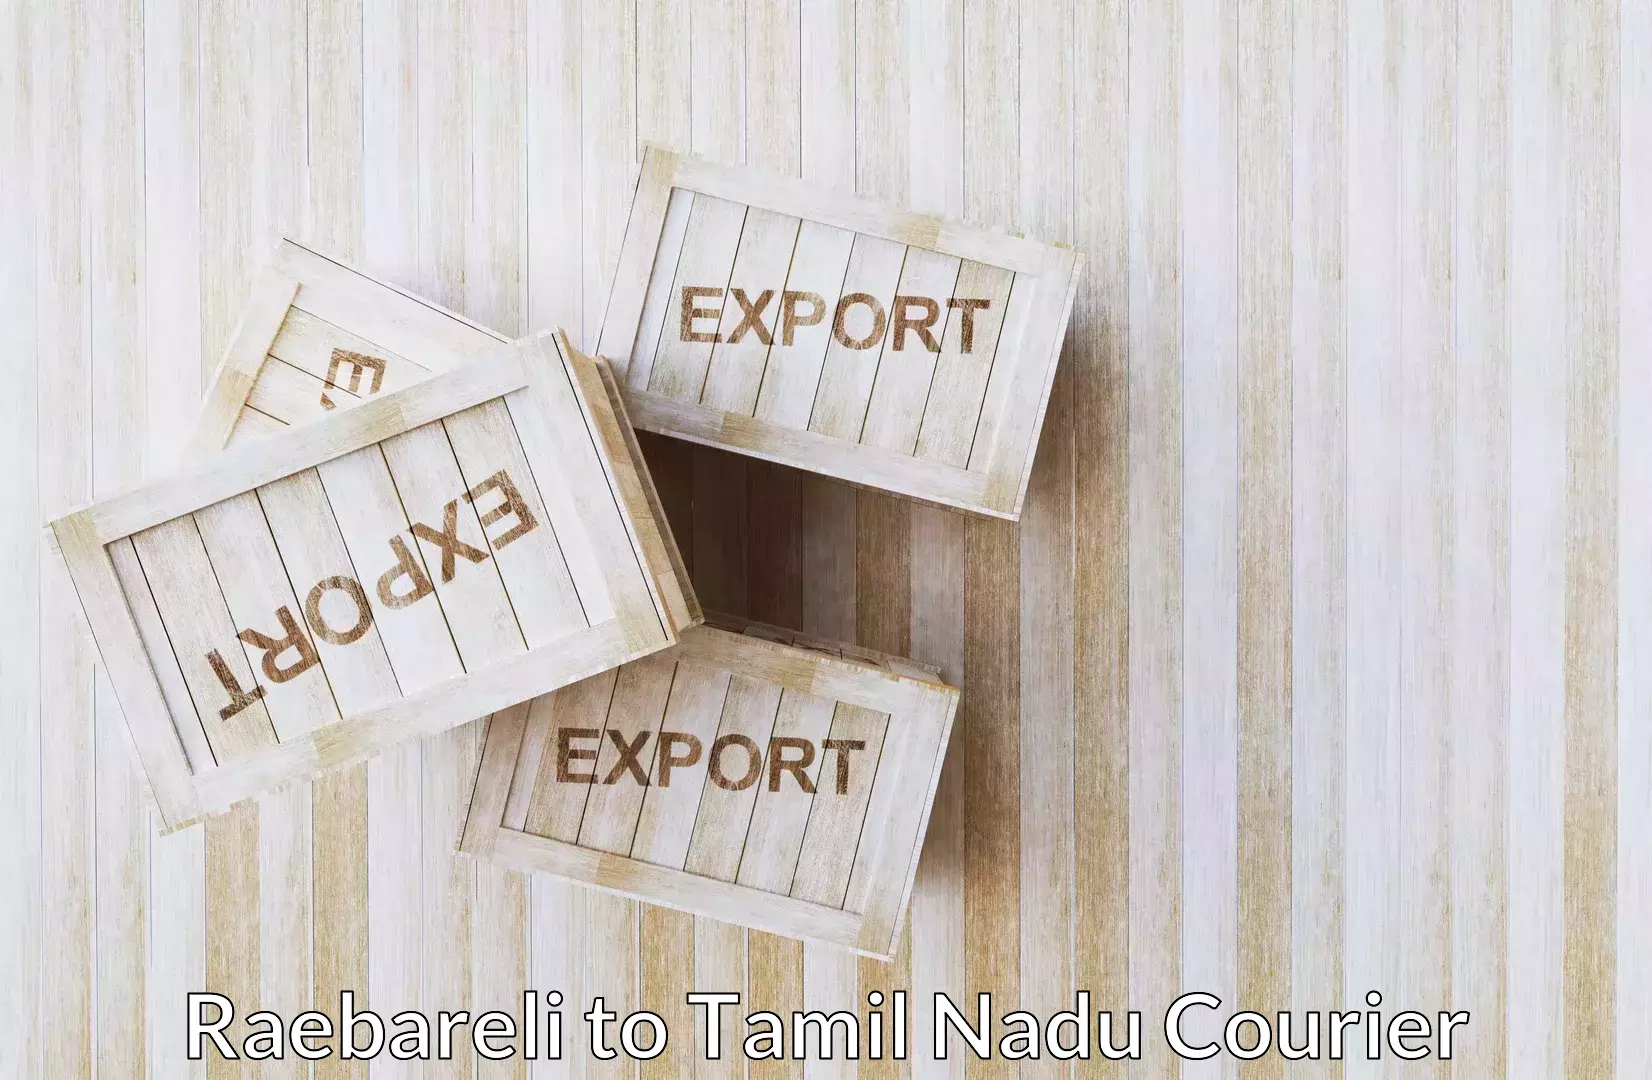 Luggage shipment specialists Raebareli to Tamil Nadu